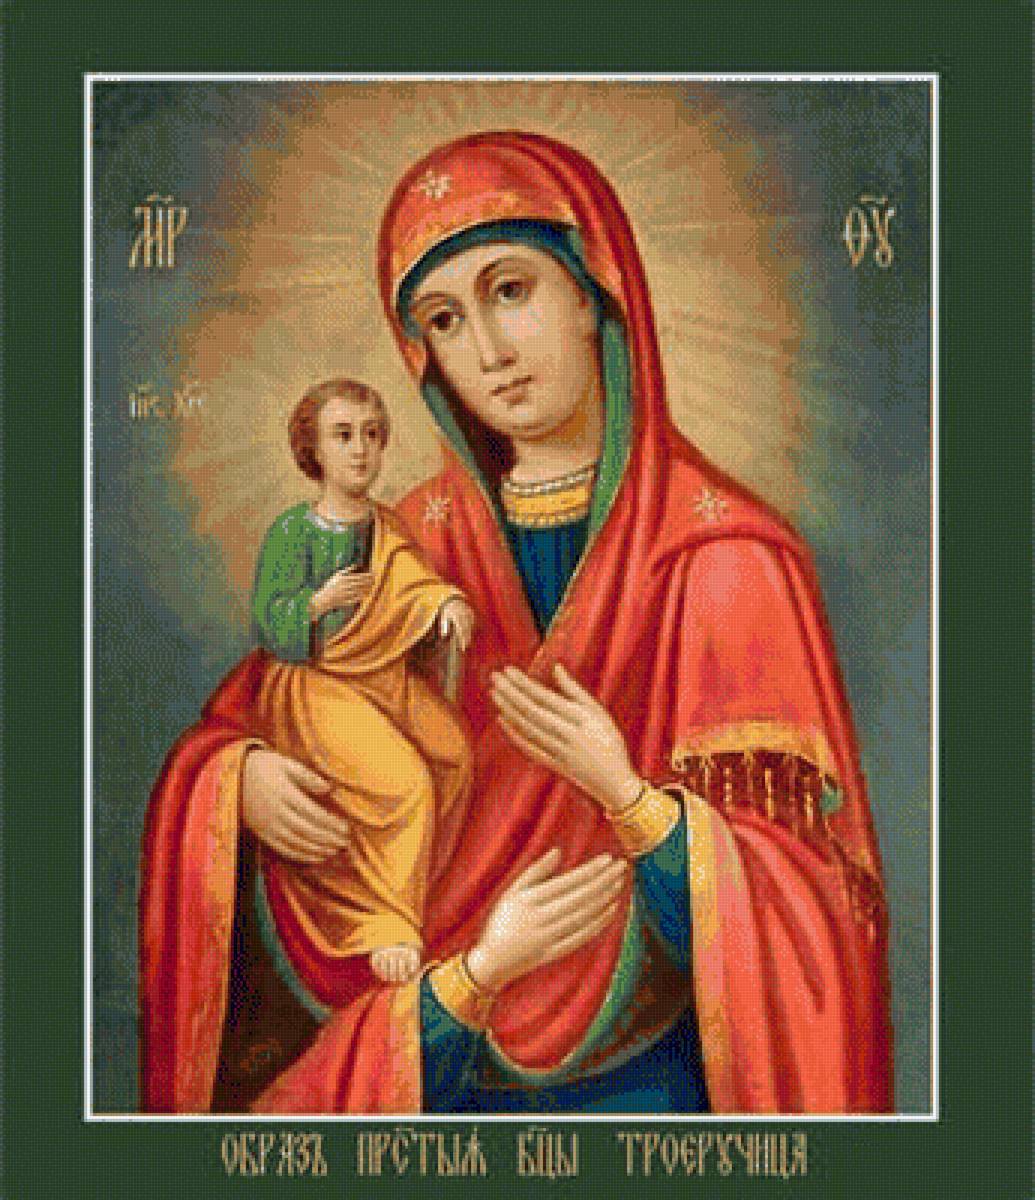 Богородица Троеручица - богородица, икона - предпросмотр